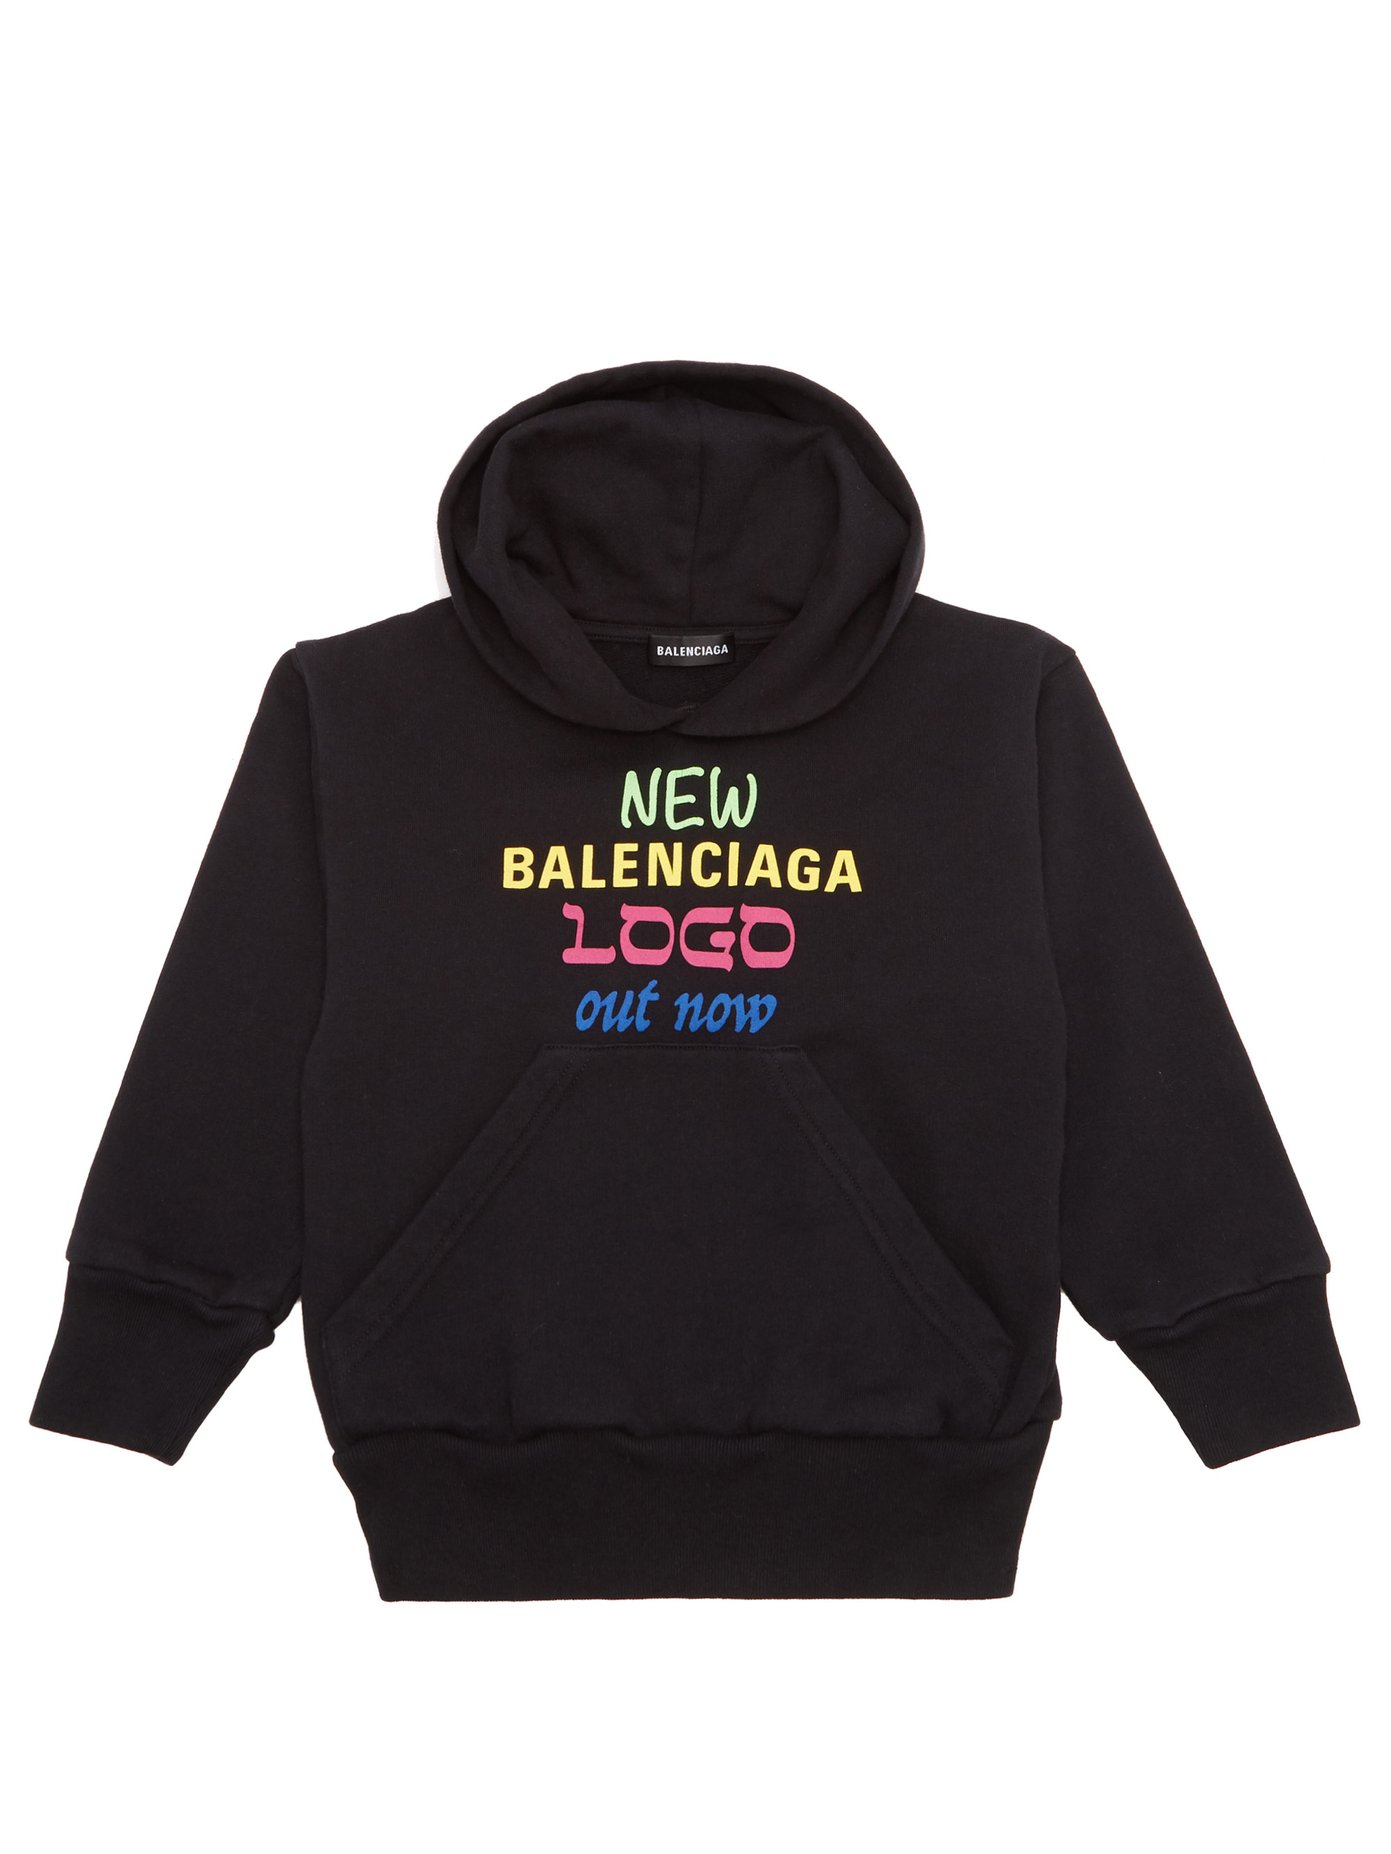 are balenciaga hoodies unisex